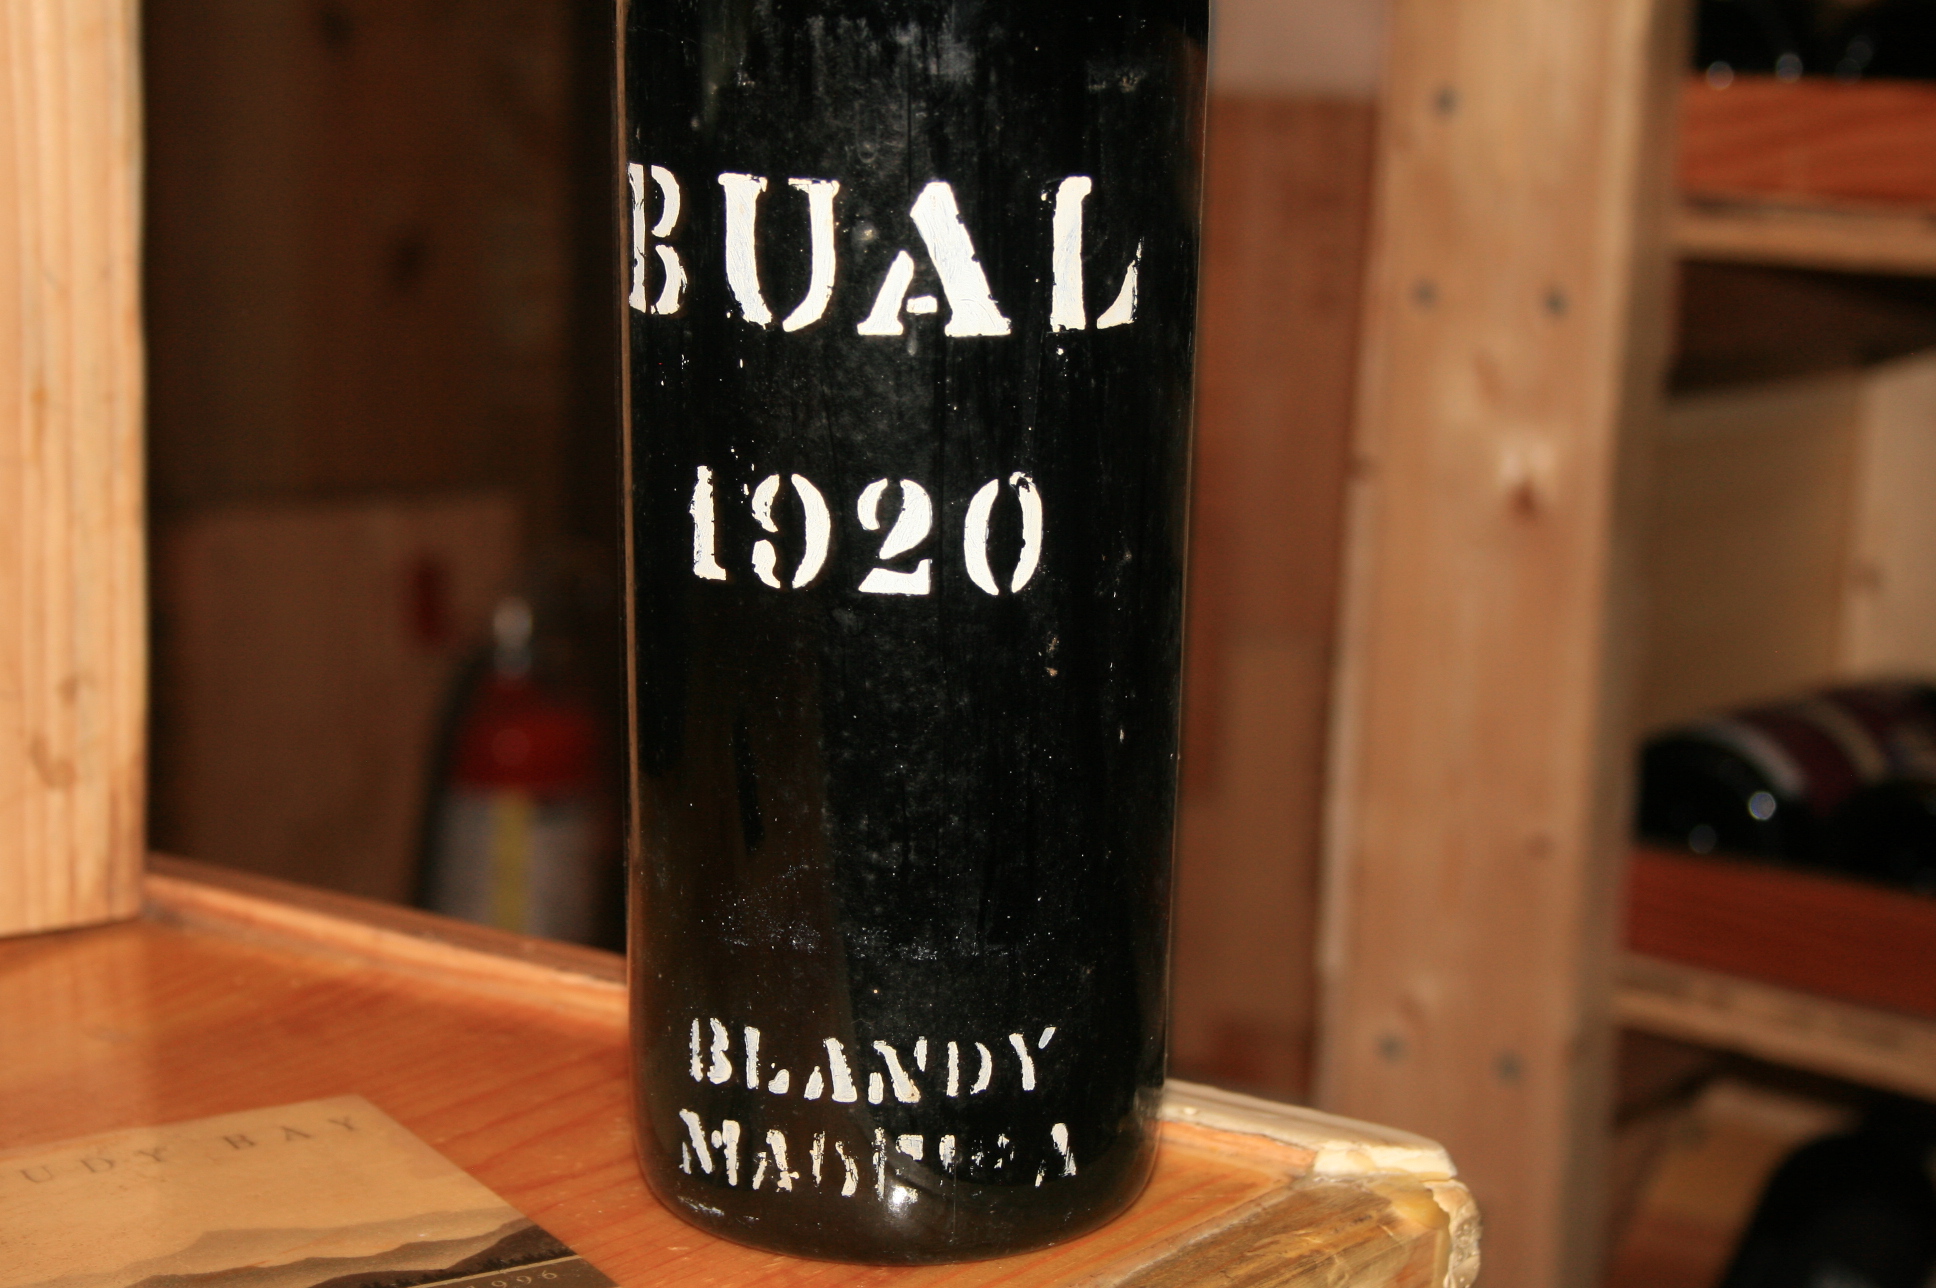 1920 Blandy's Bual Madeira image